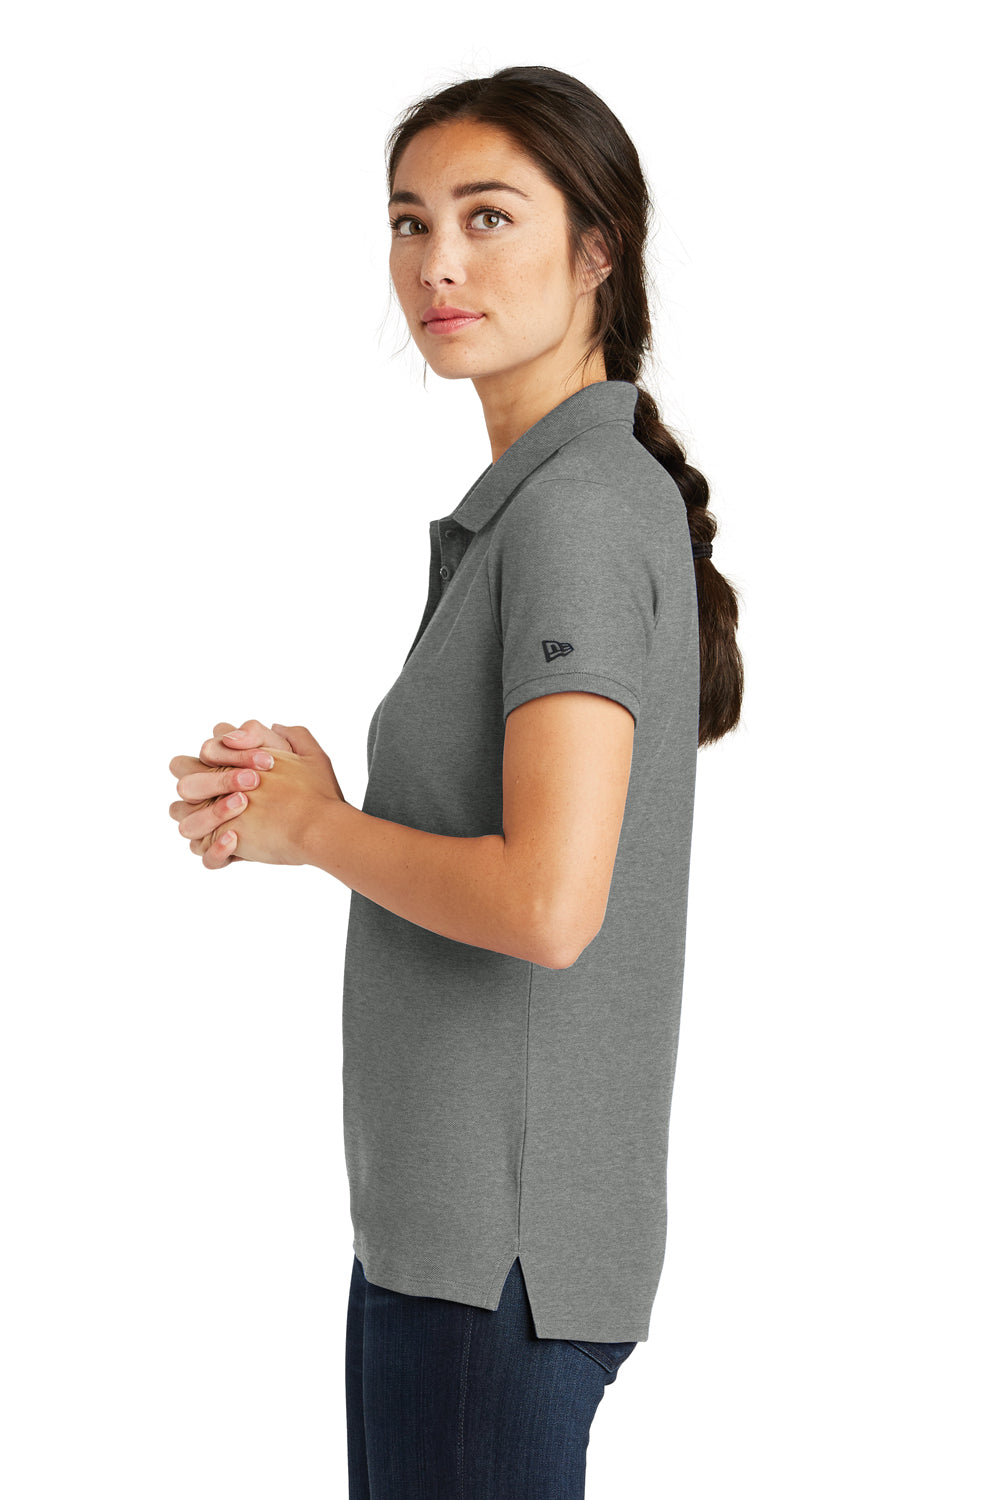 New Era LNEA300 Womens Venue Home Plate Moisture Wicking Short Sleeve Polo Shirt Heather Graphite Grey Side